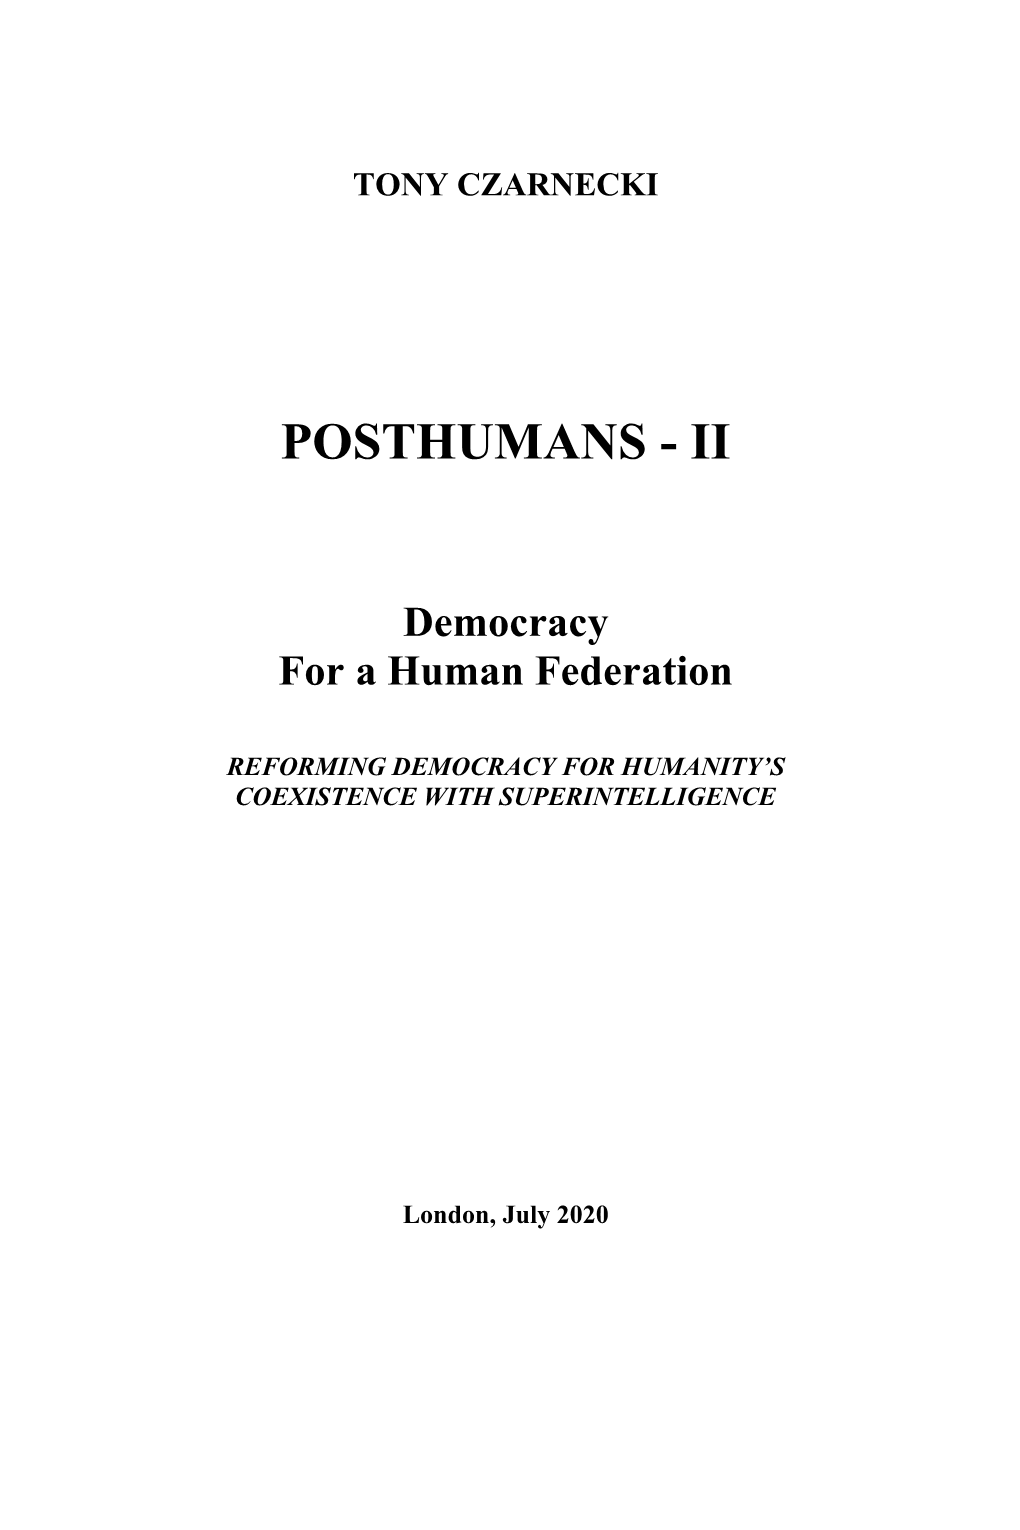 Free PDF Version